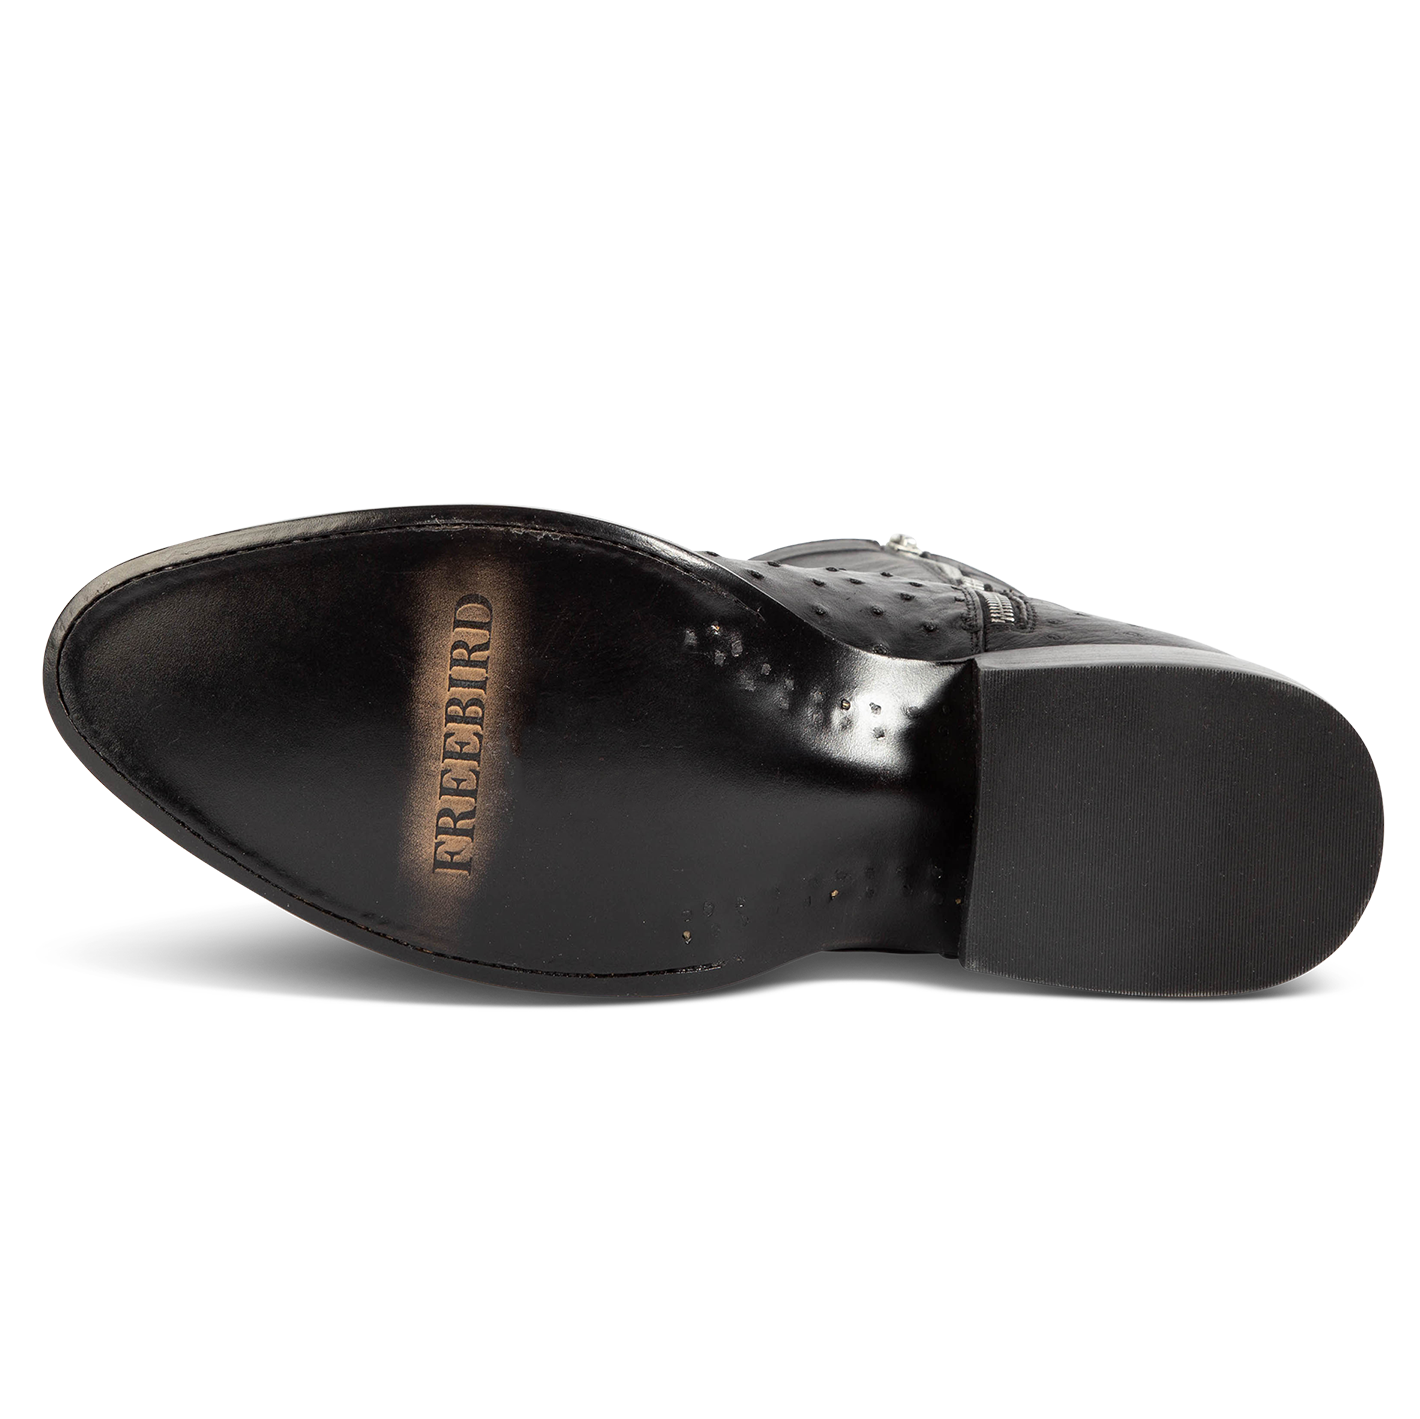 Leather imprinted sole FREEBIRD on men's Desperado black mid calf boot